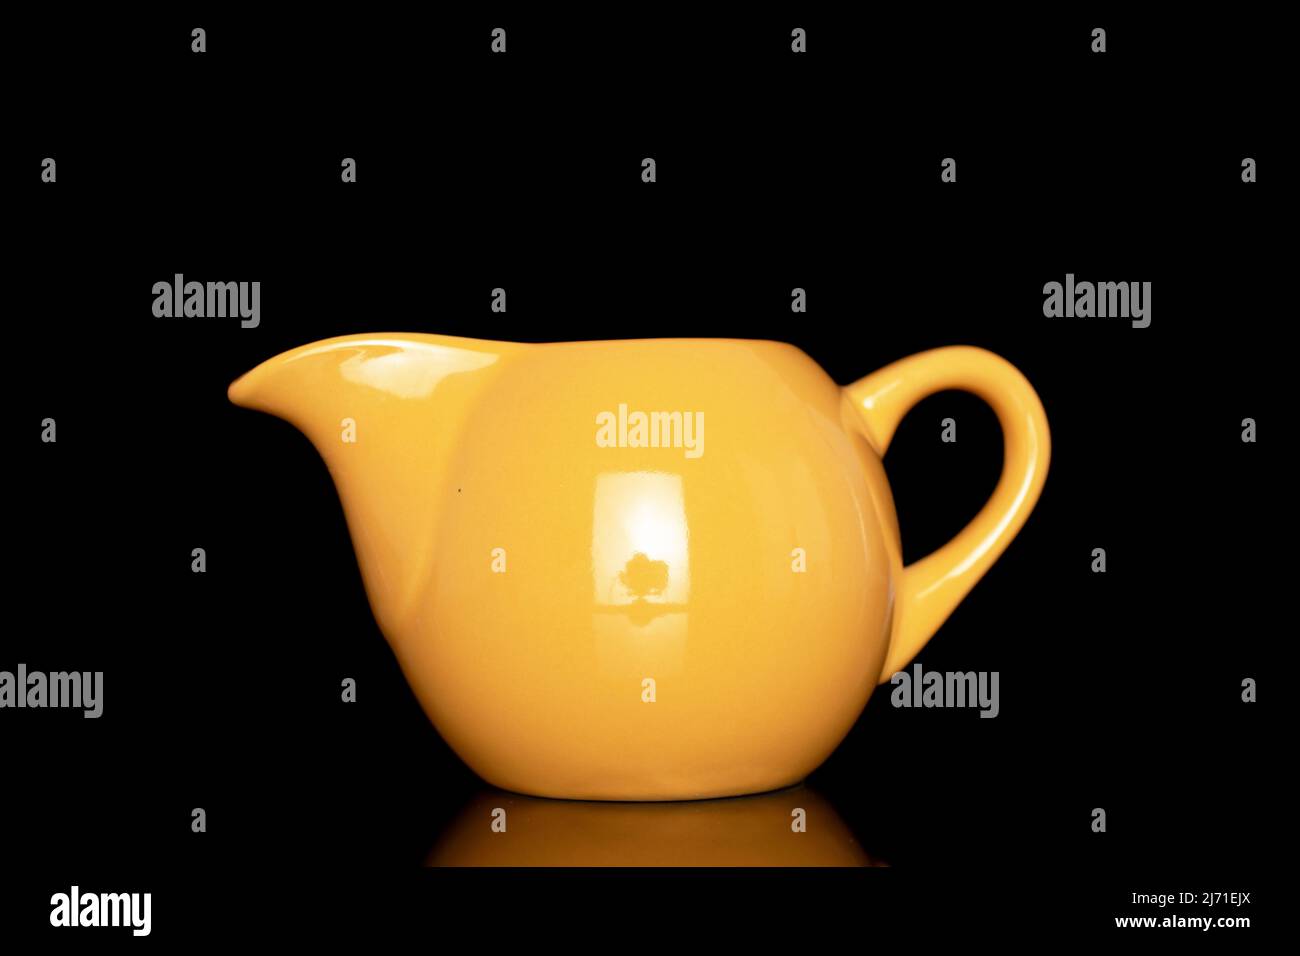 https://c8.alamy.com/comp/2J71EJX/one-ceramic-milk-jug-close-up-isolated-on-a-black-background-2J71EJX.jpg